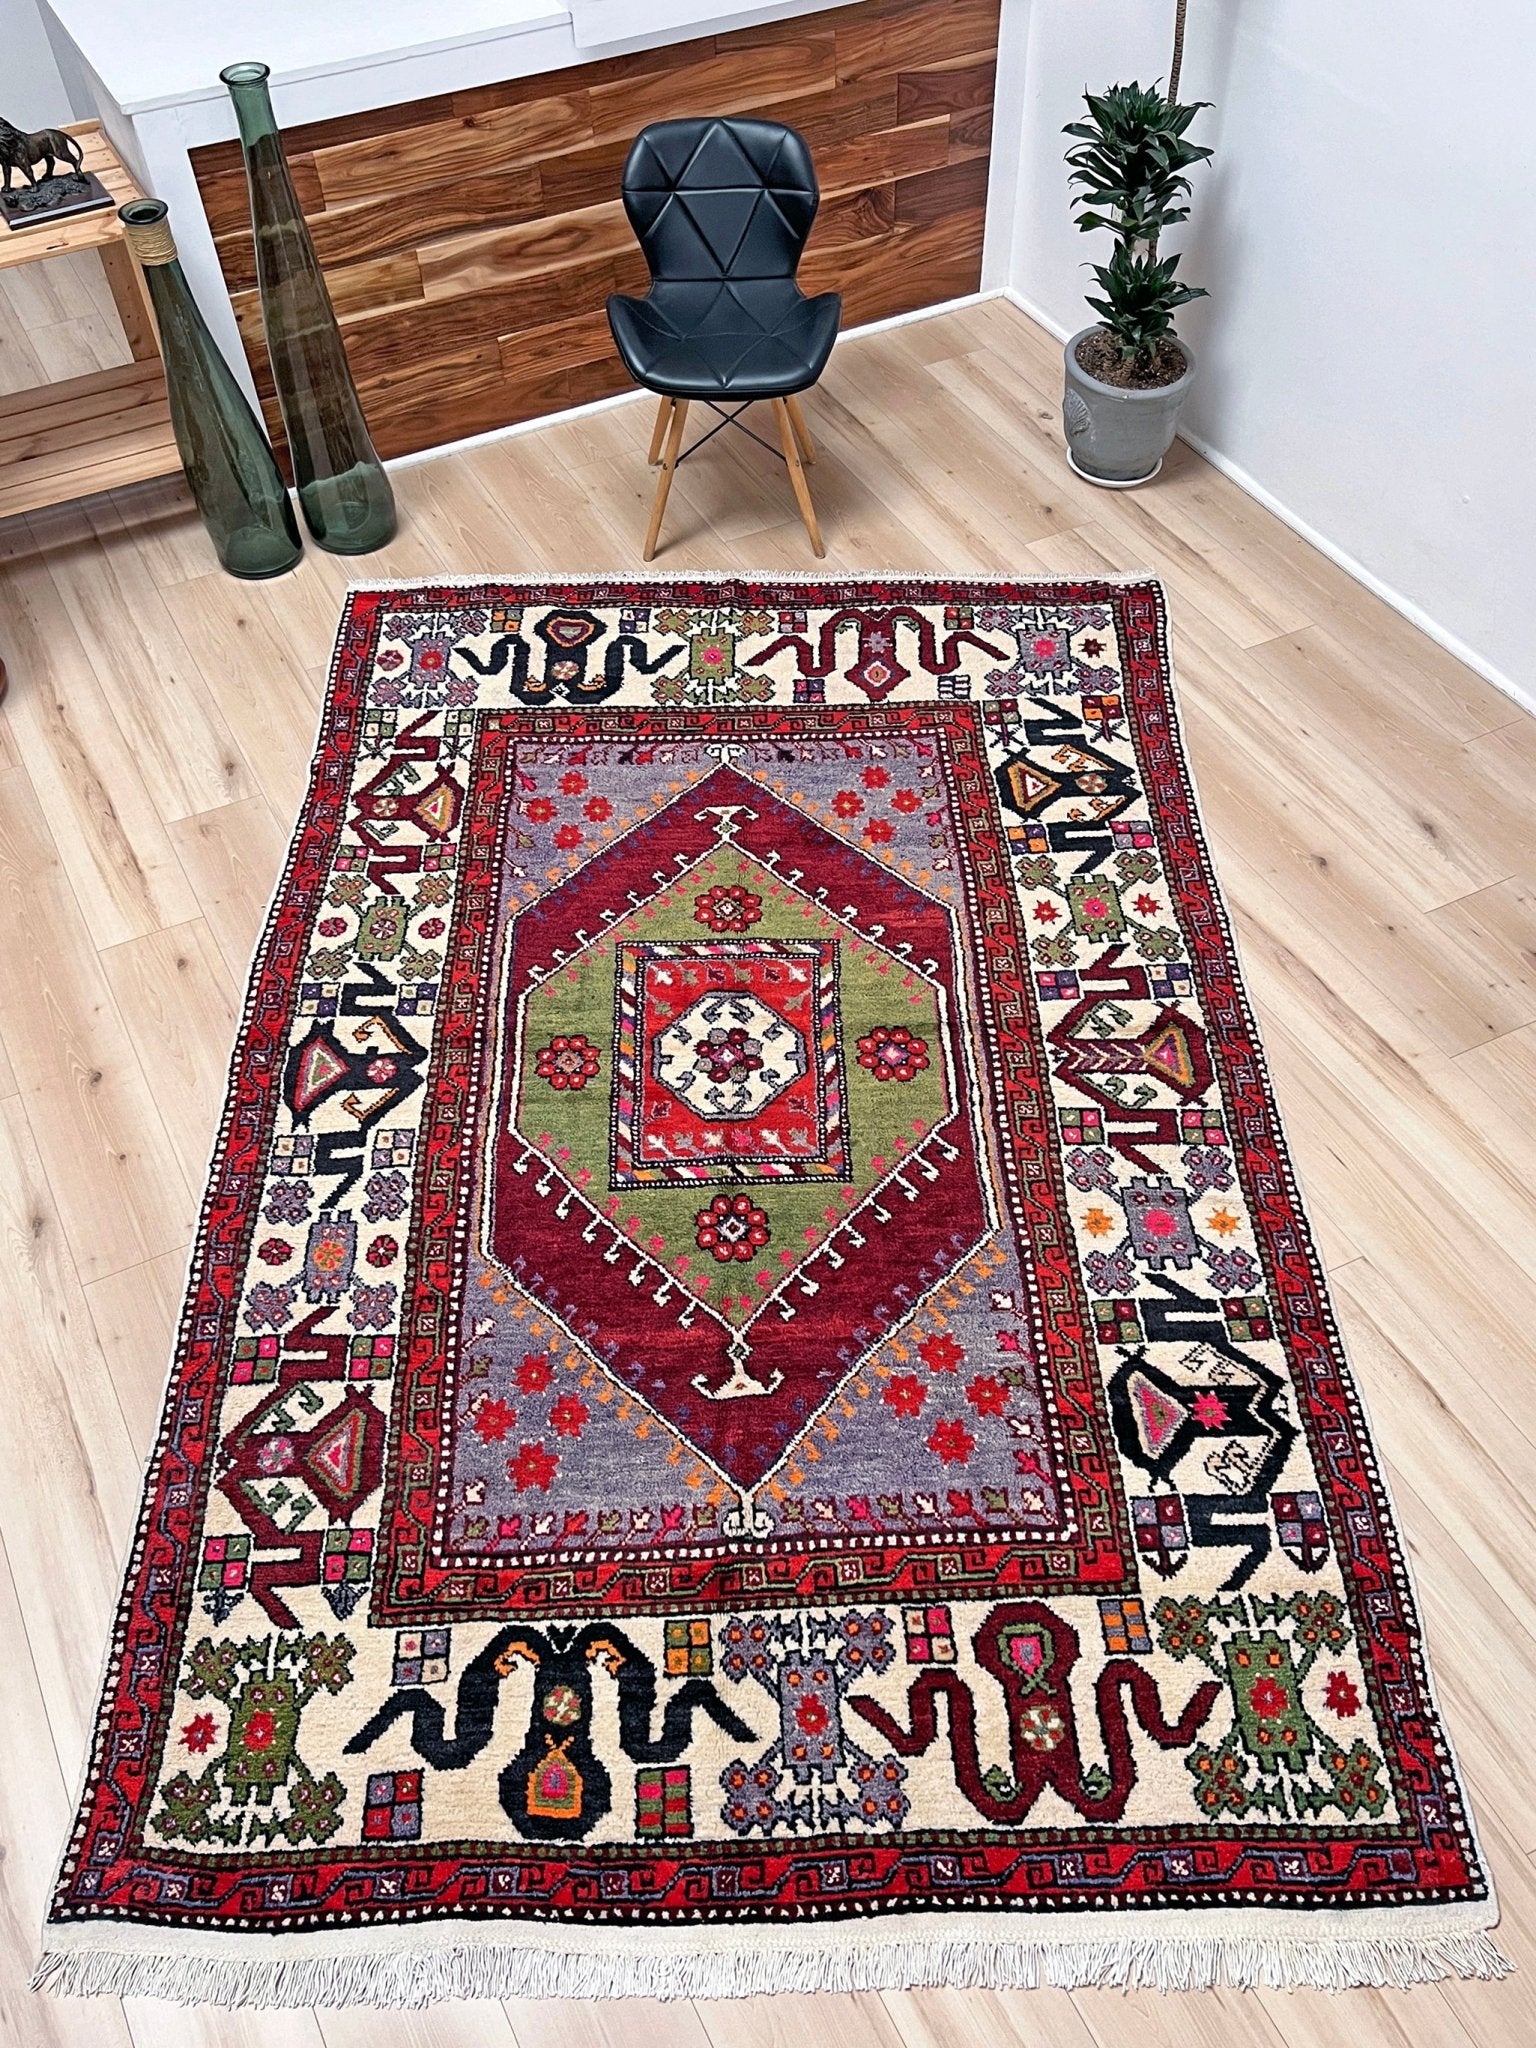 Cloudband vintage turkish rug shop Sf Bay area. Handmade rug buy online. Oriental rug shop palo alto.